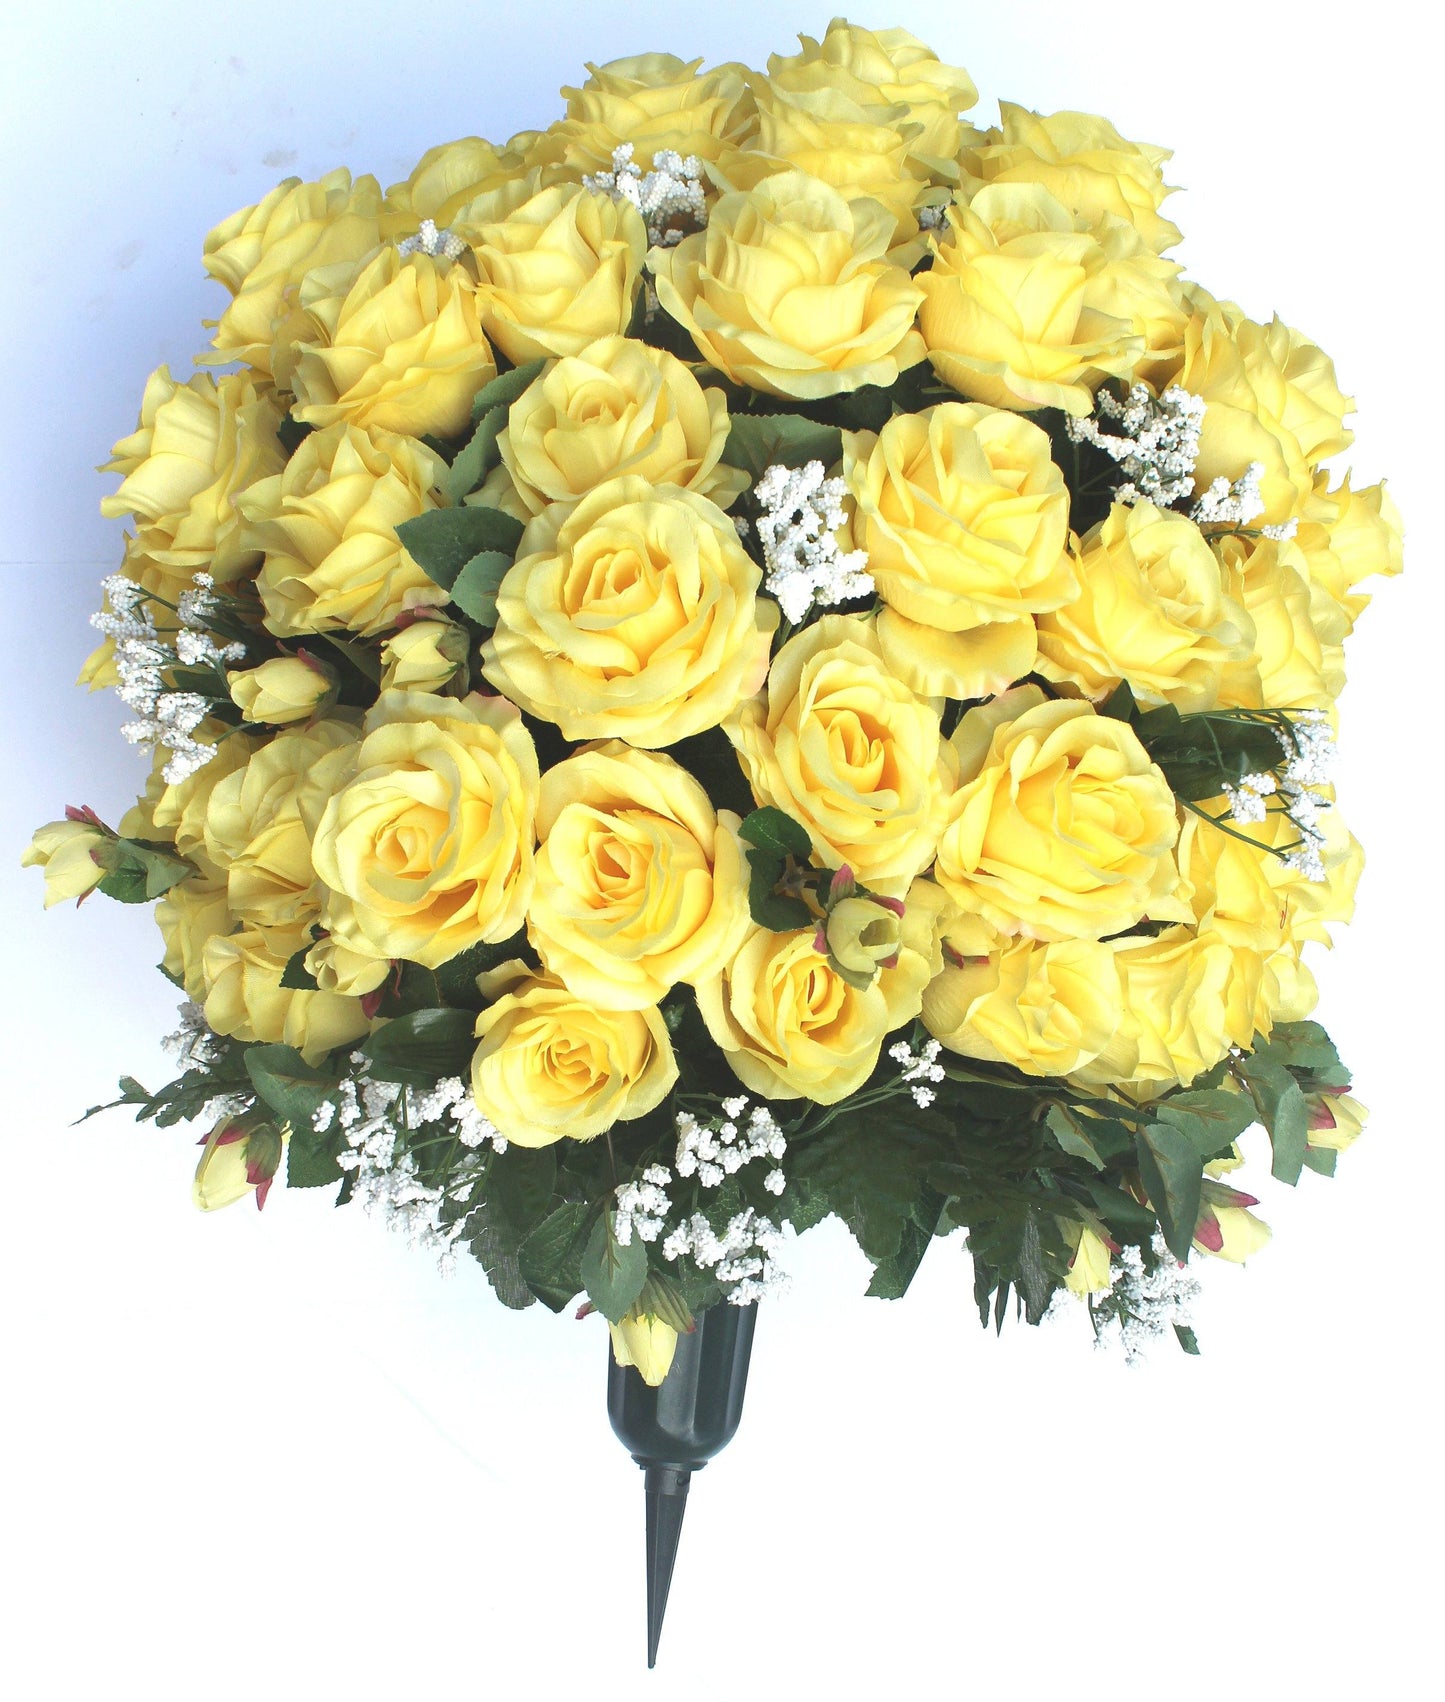 Extra Large Vase - Over 80 Roses (Choose color)